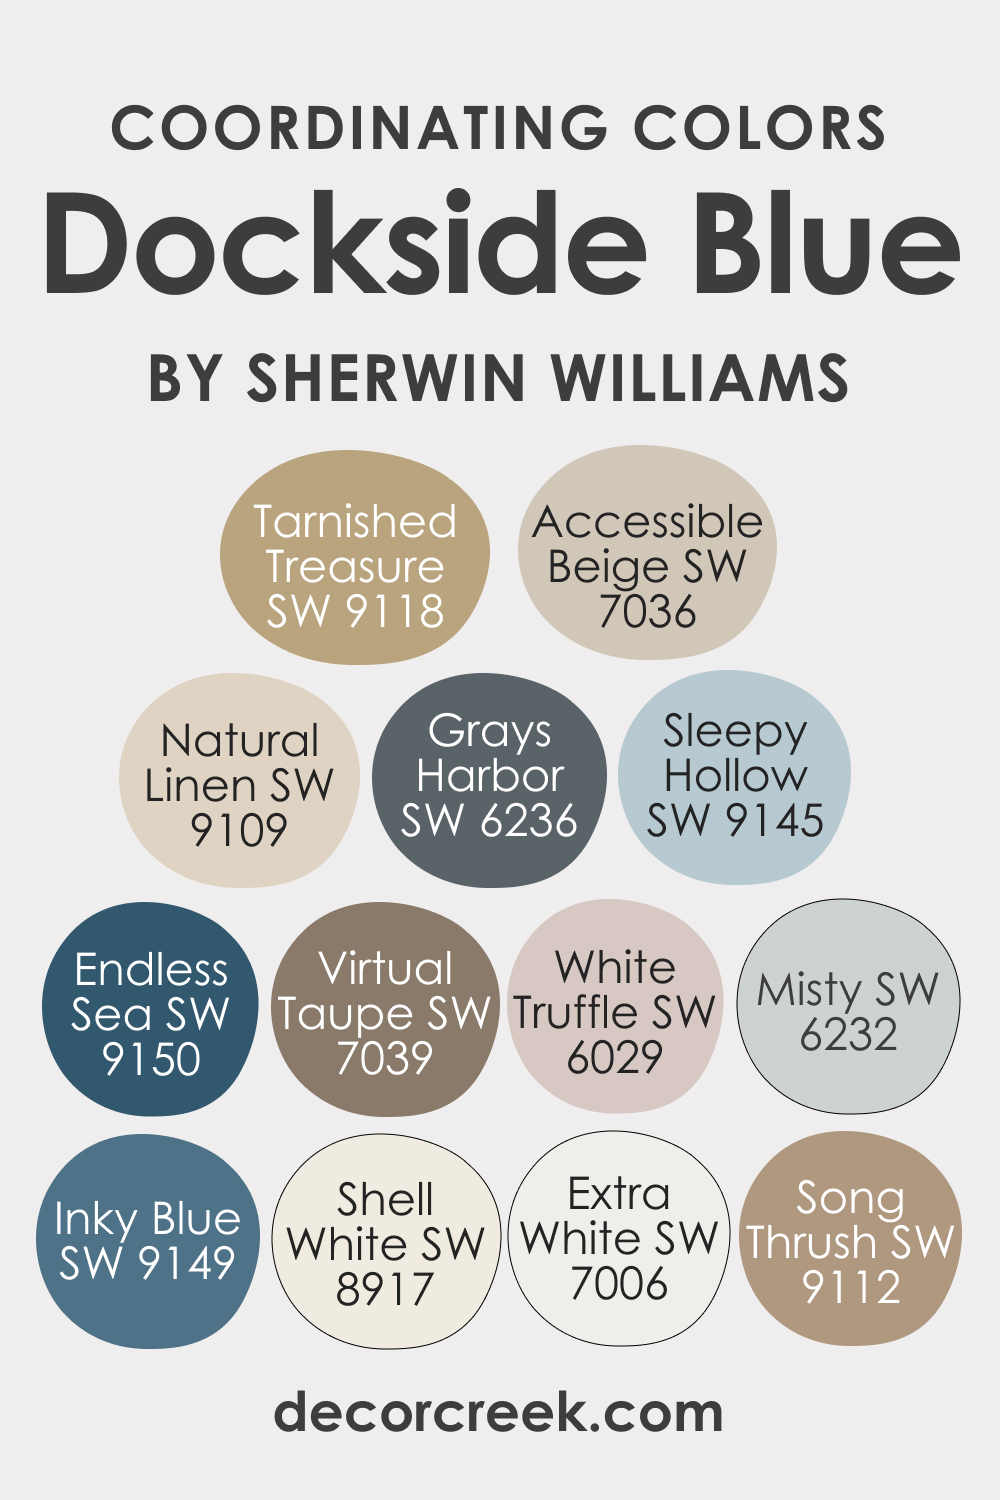 SW Dockside Blue Coordinating Colors